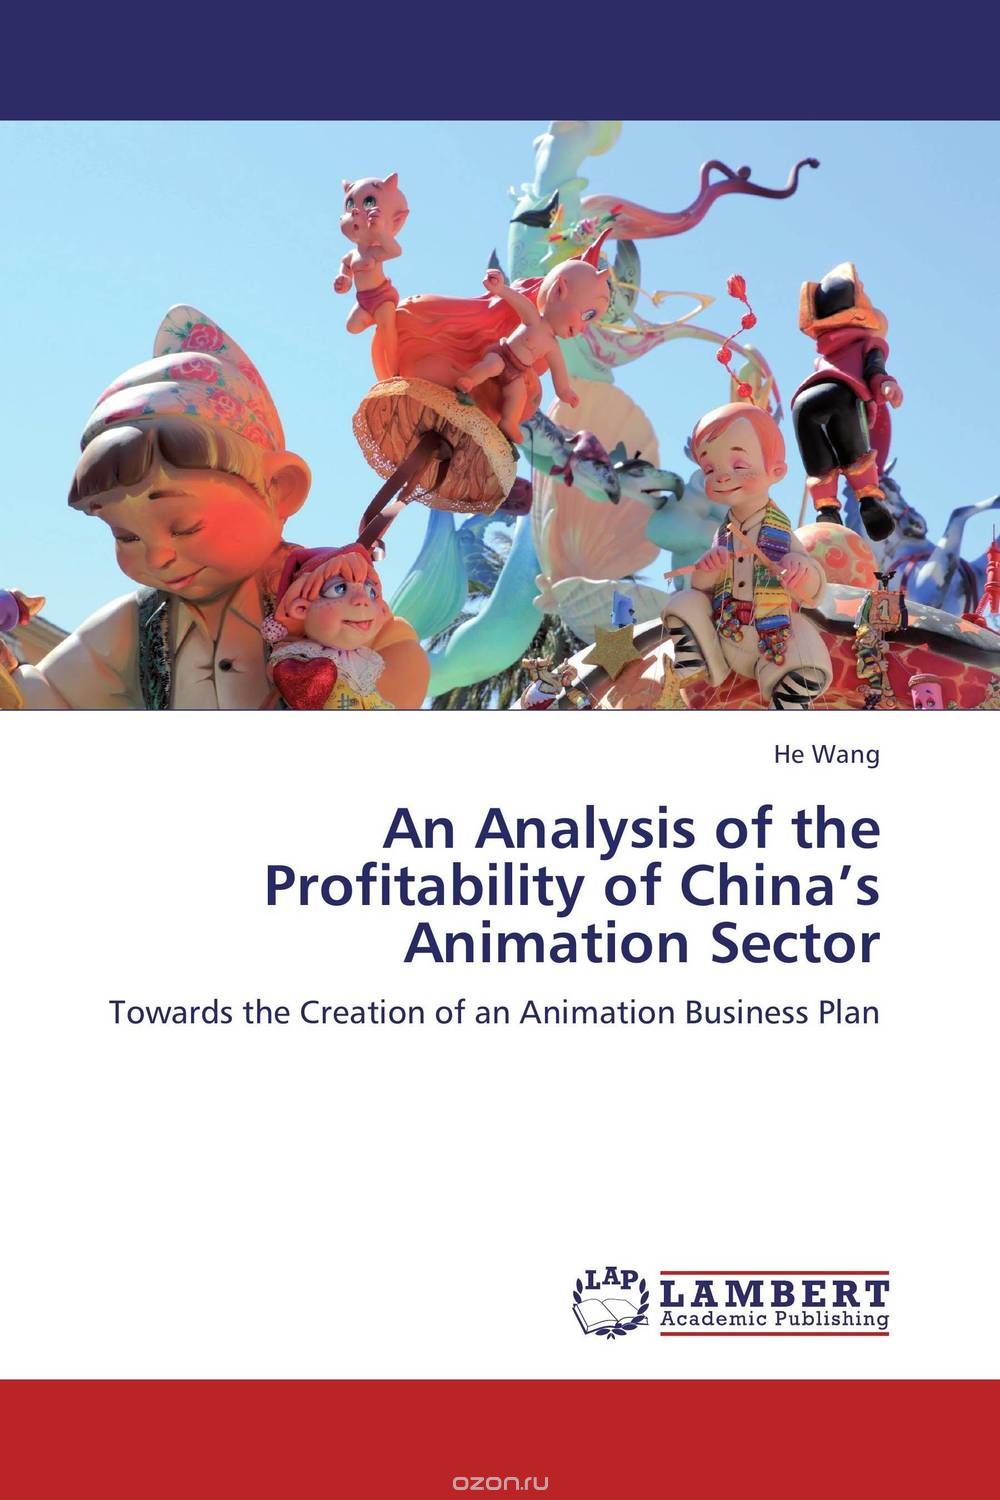 Скачать книгу "An Analysis of the Profitability of China’s Animation Sector"